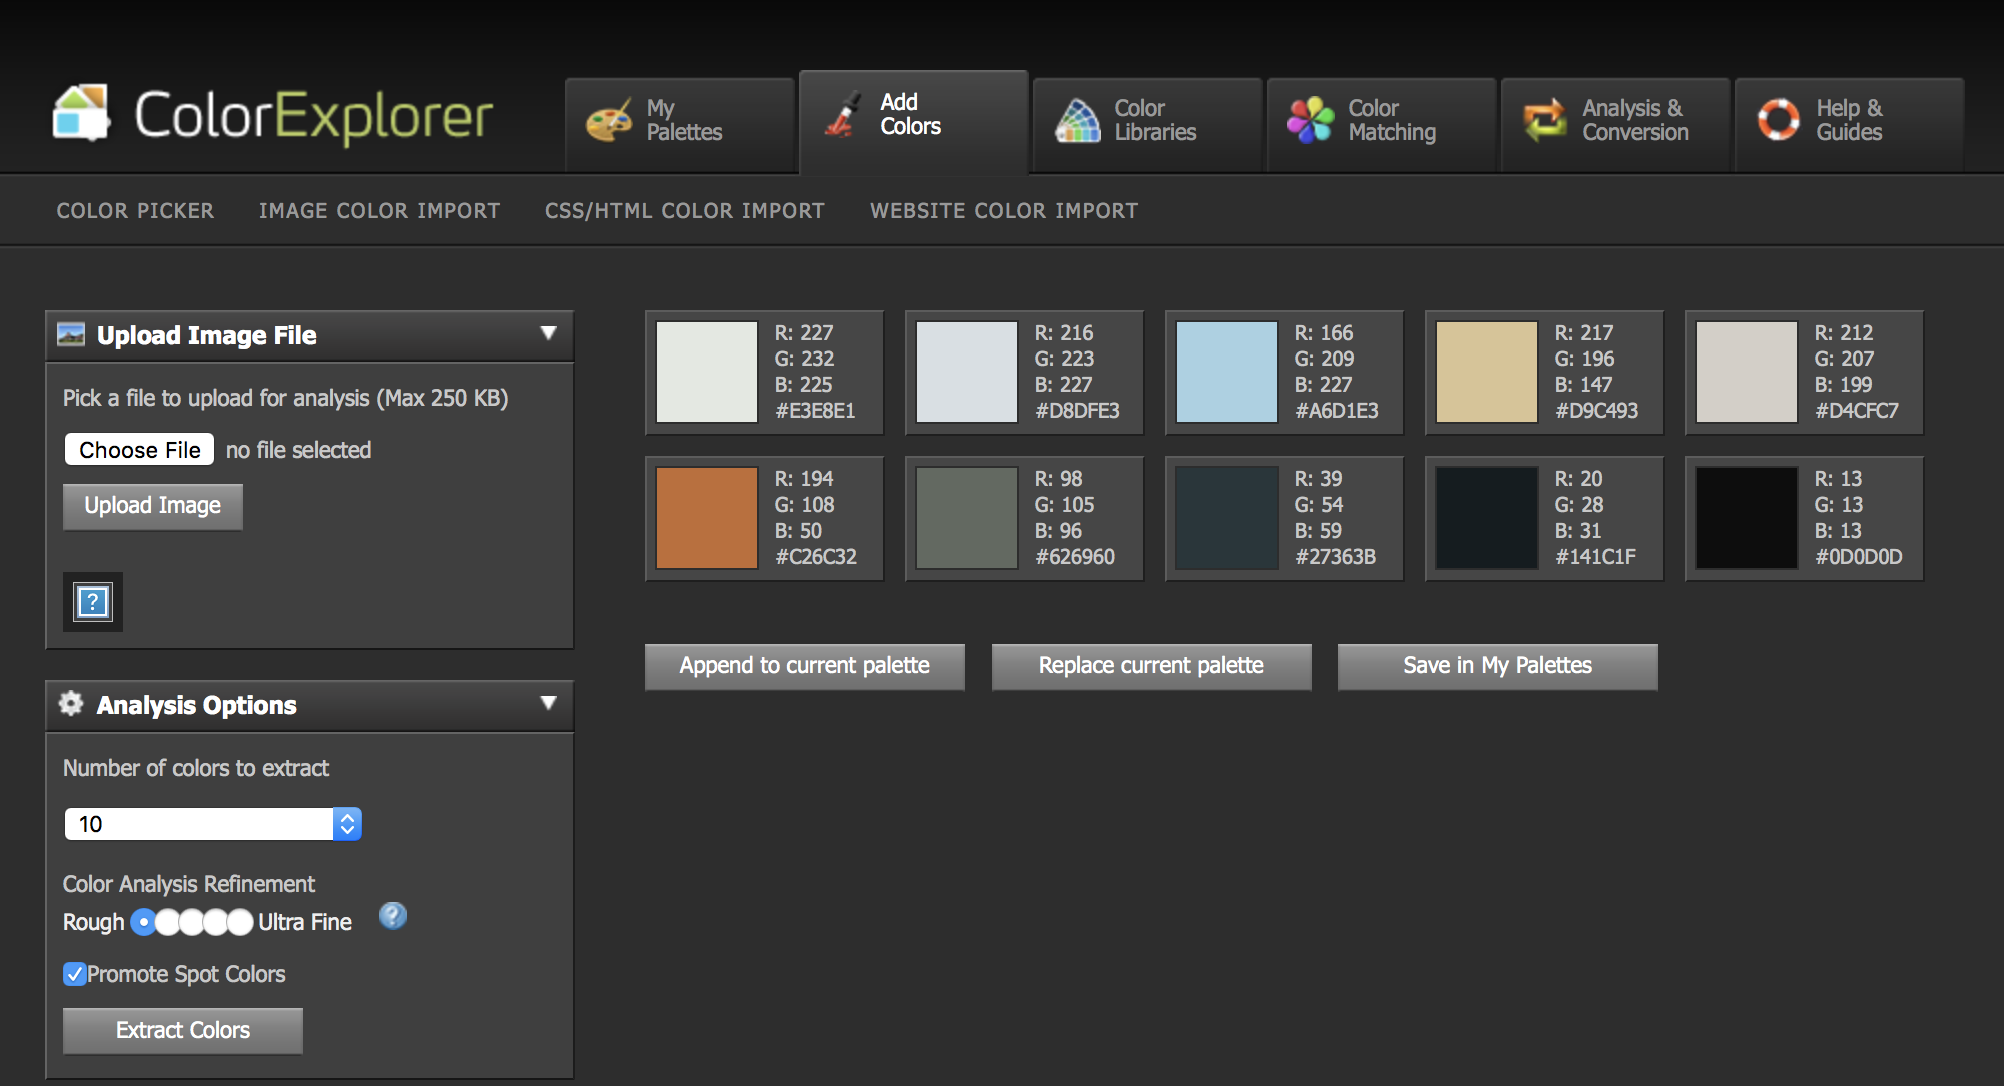  ColorExplorer interface 